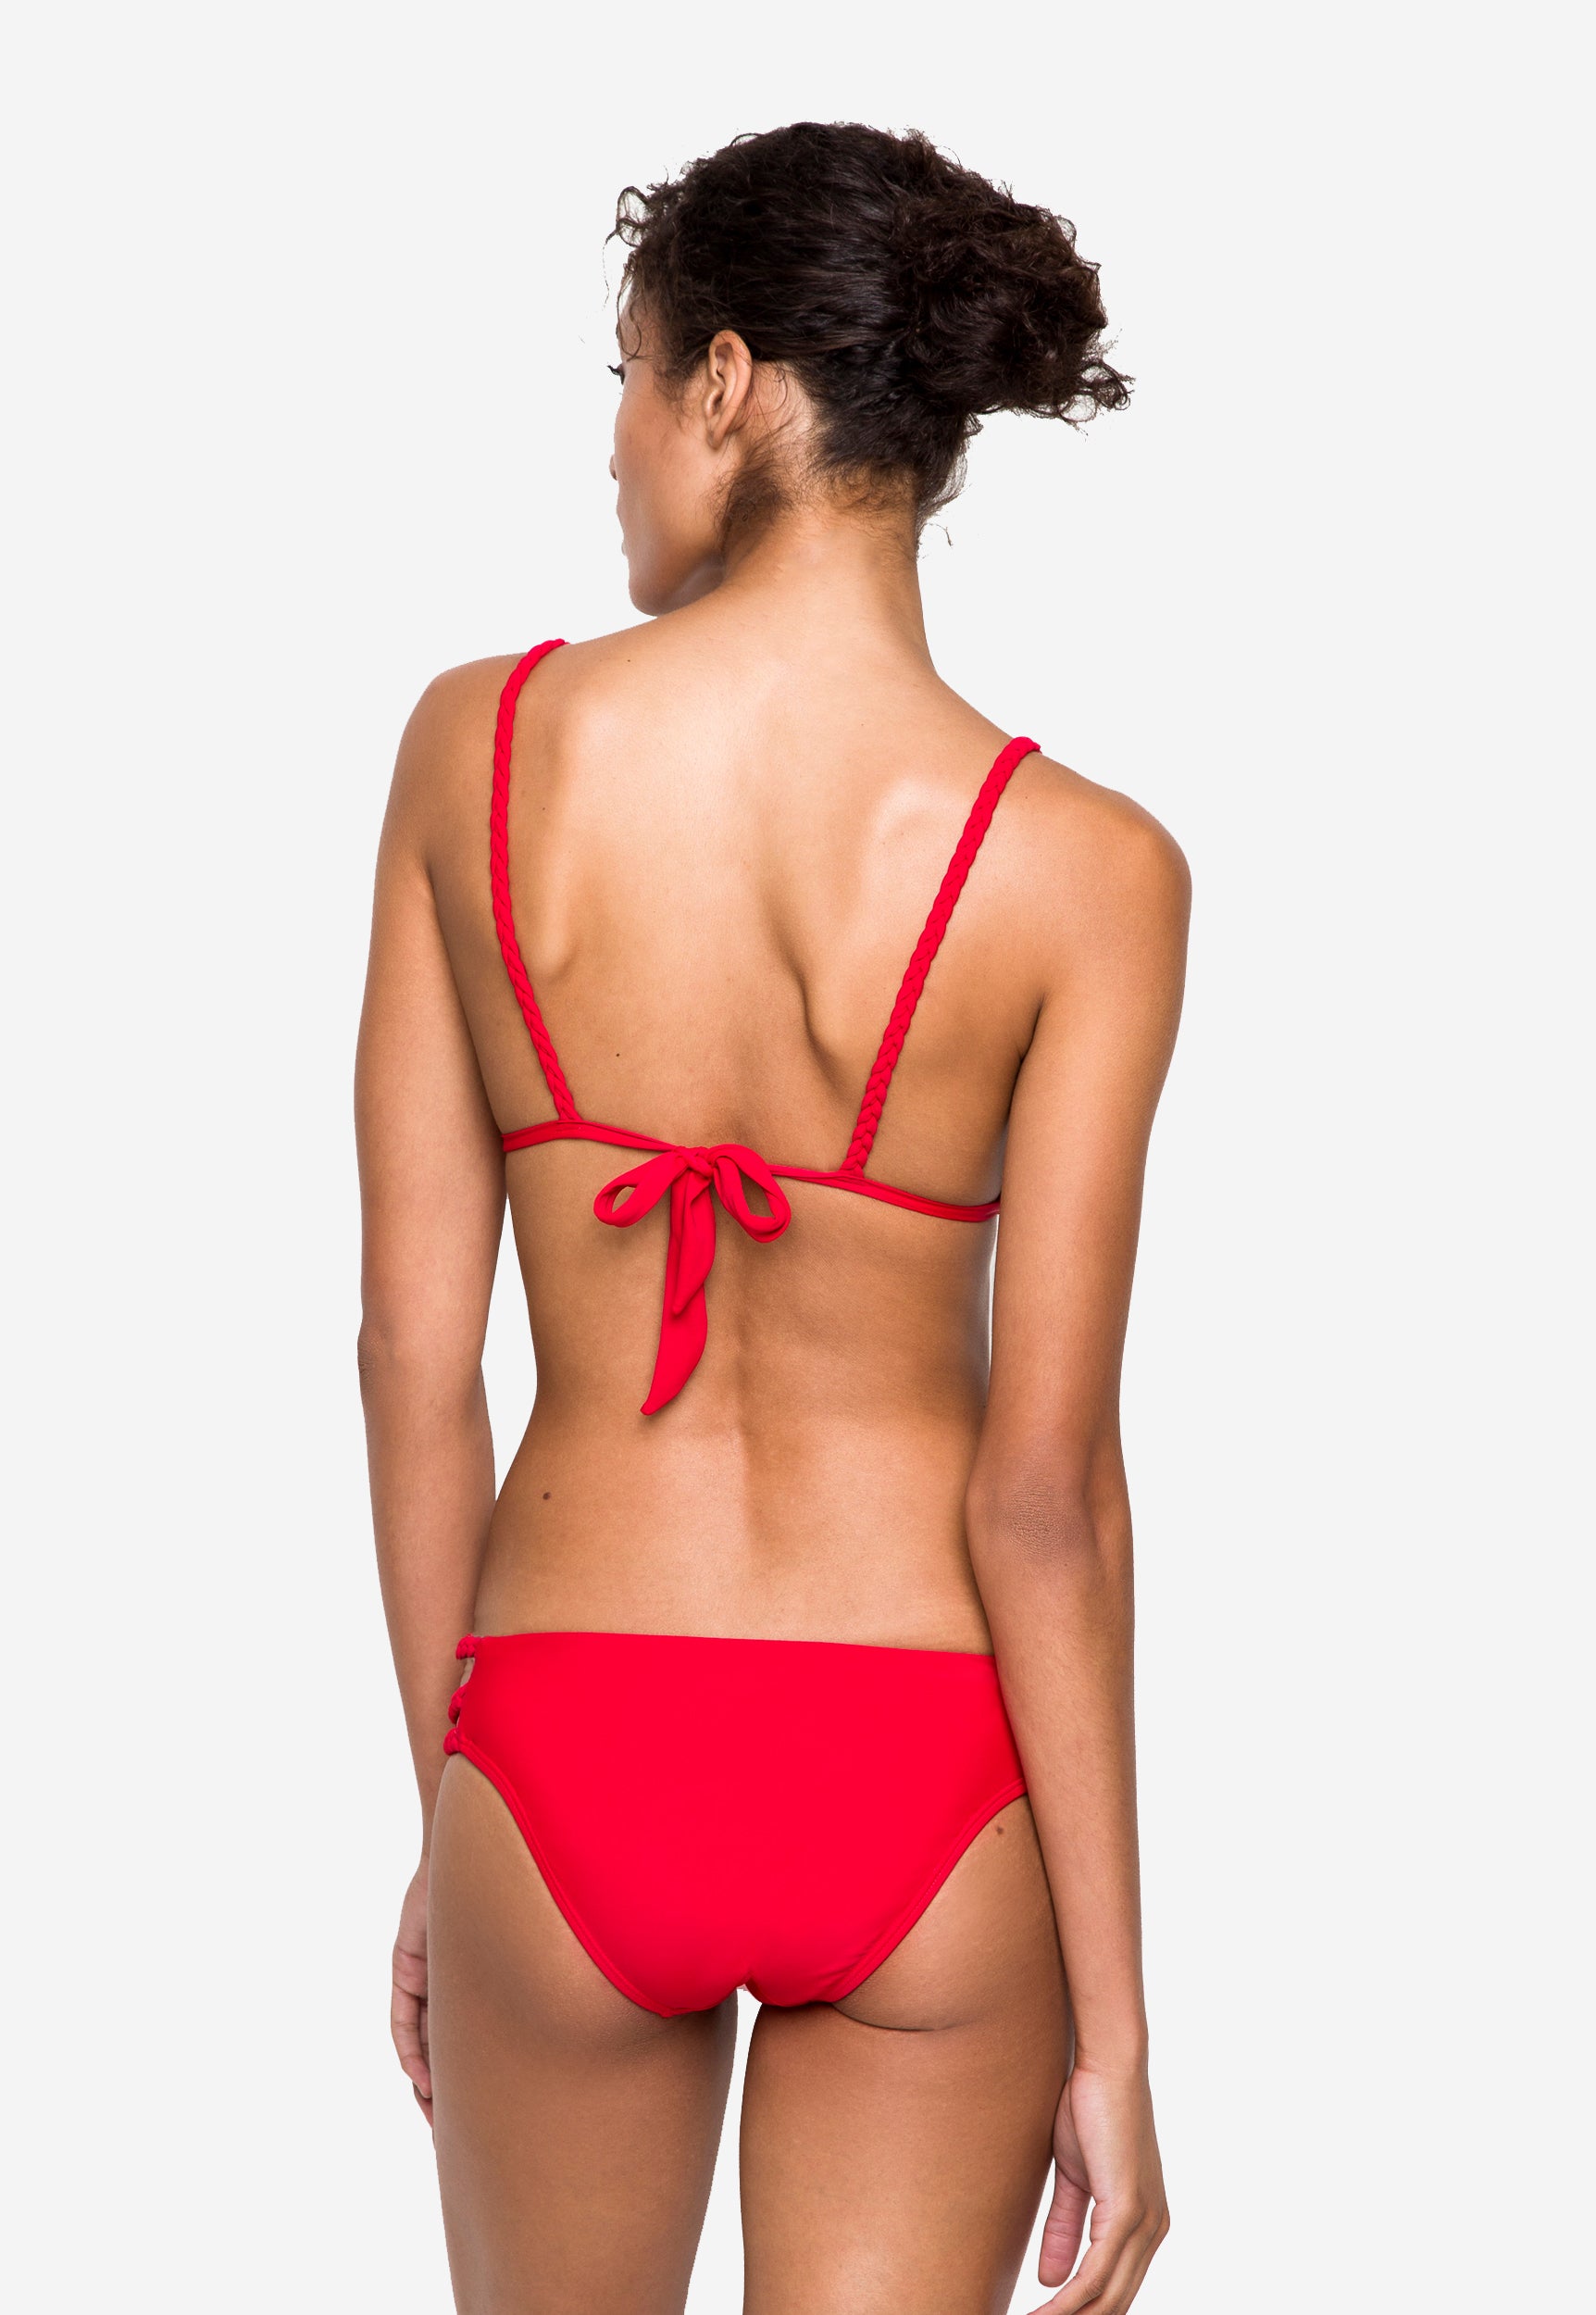 Braided Shore Bikini Top